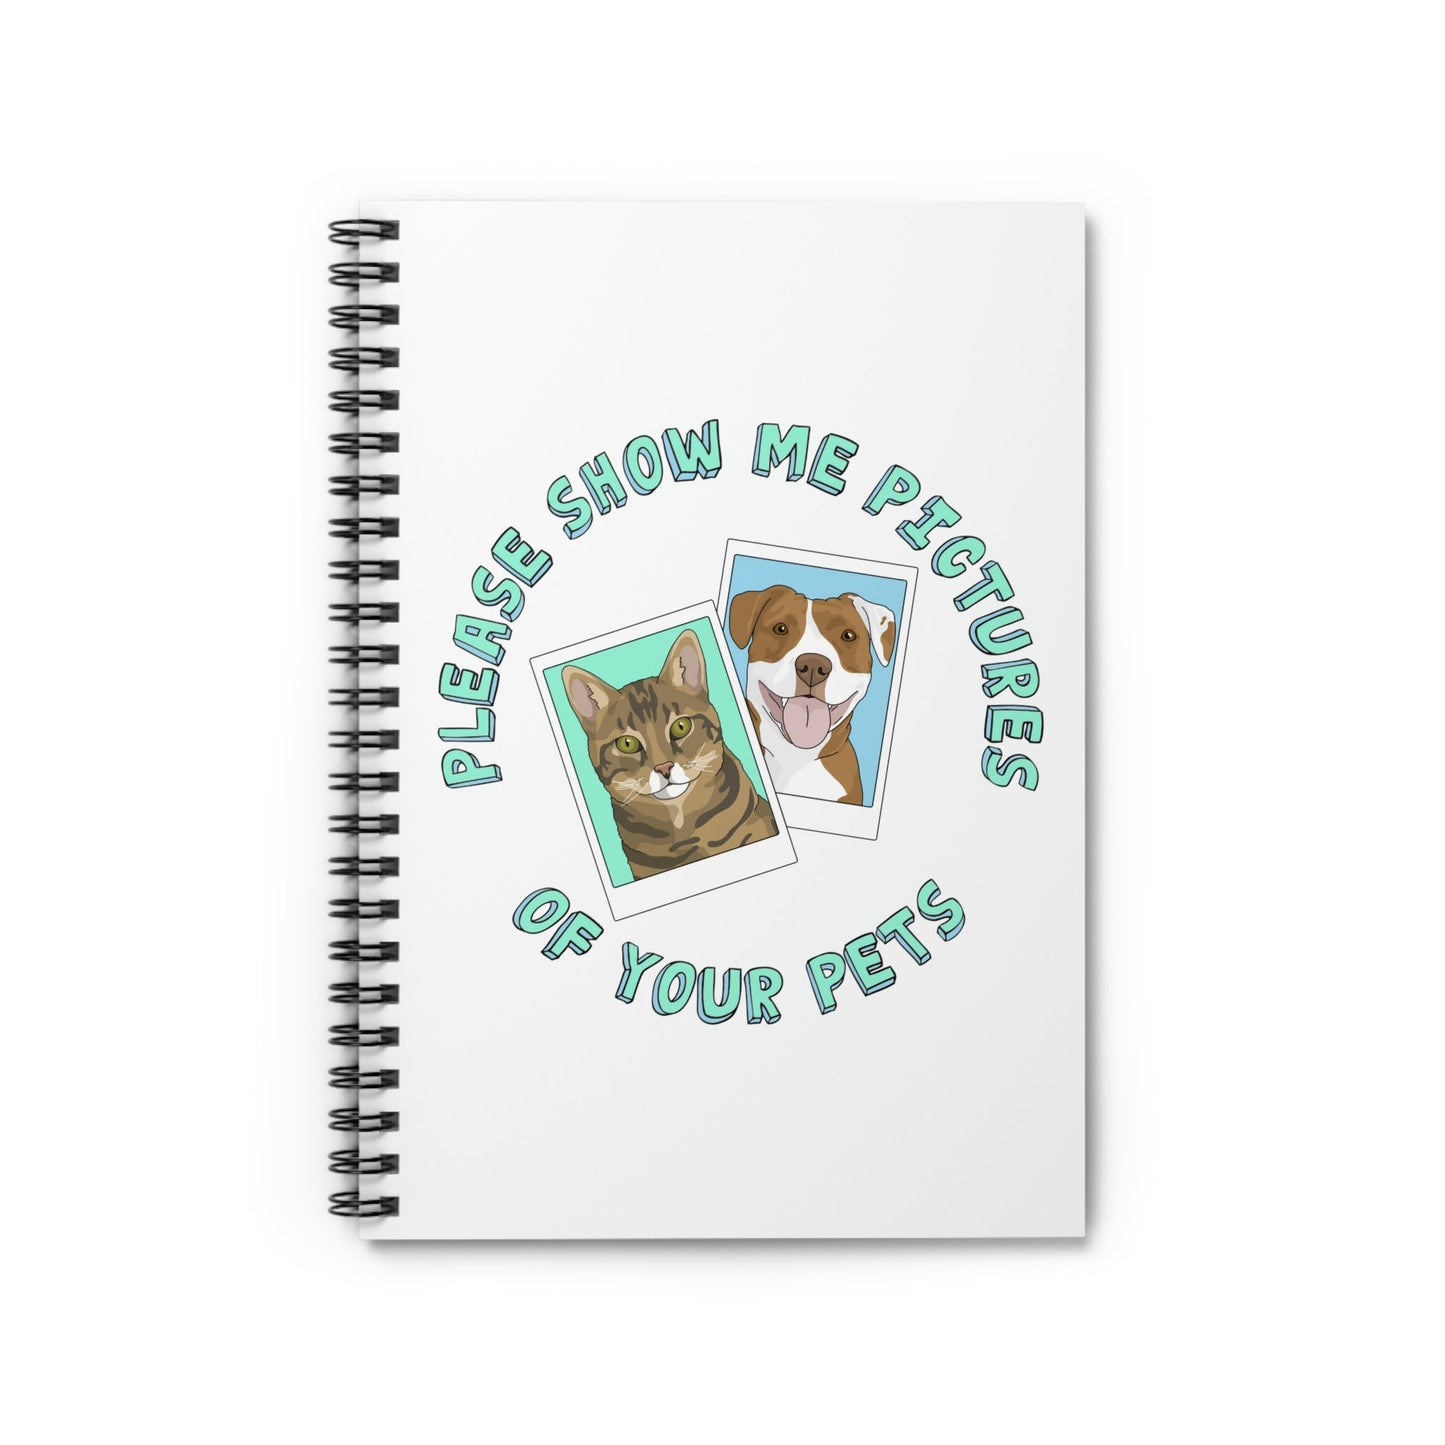 Please Show Me Pictures Of Your Pets | Notebook - Detezi Designs-34017160791108694470